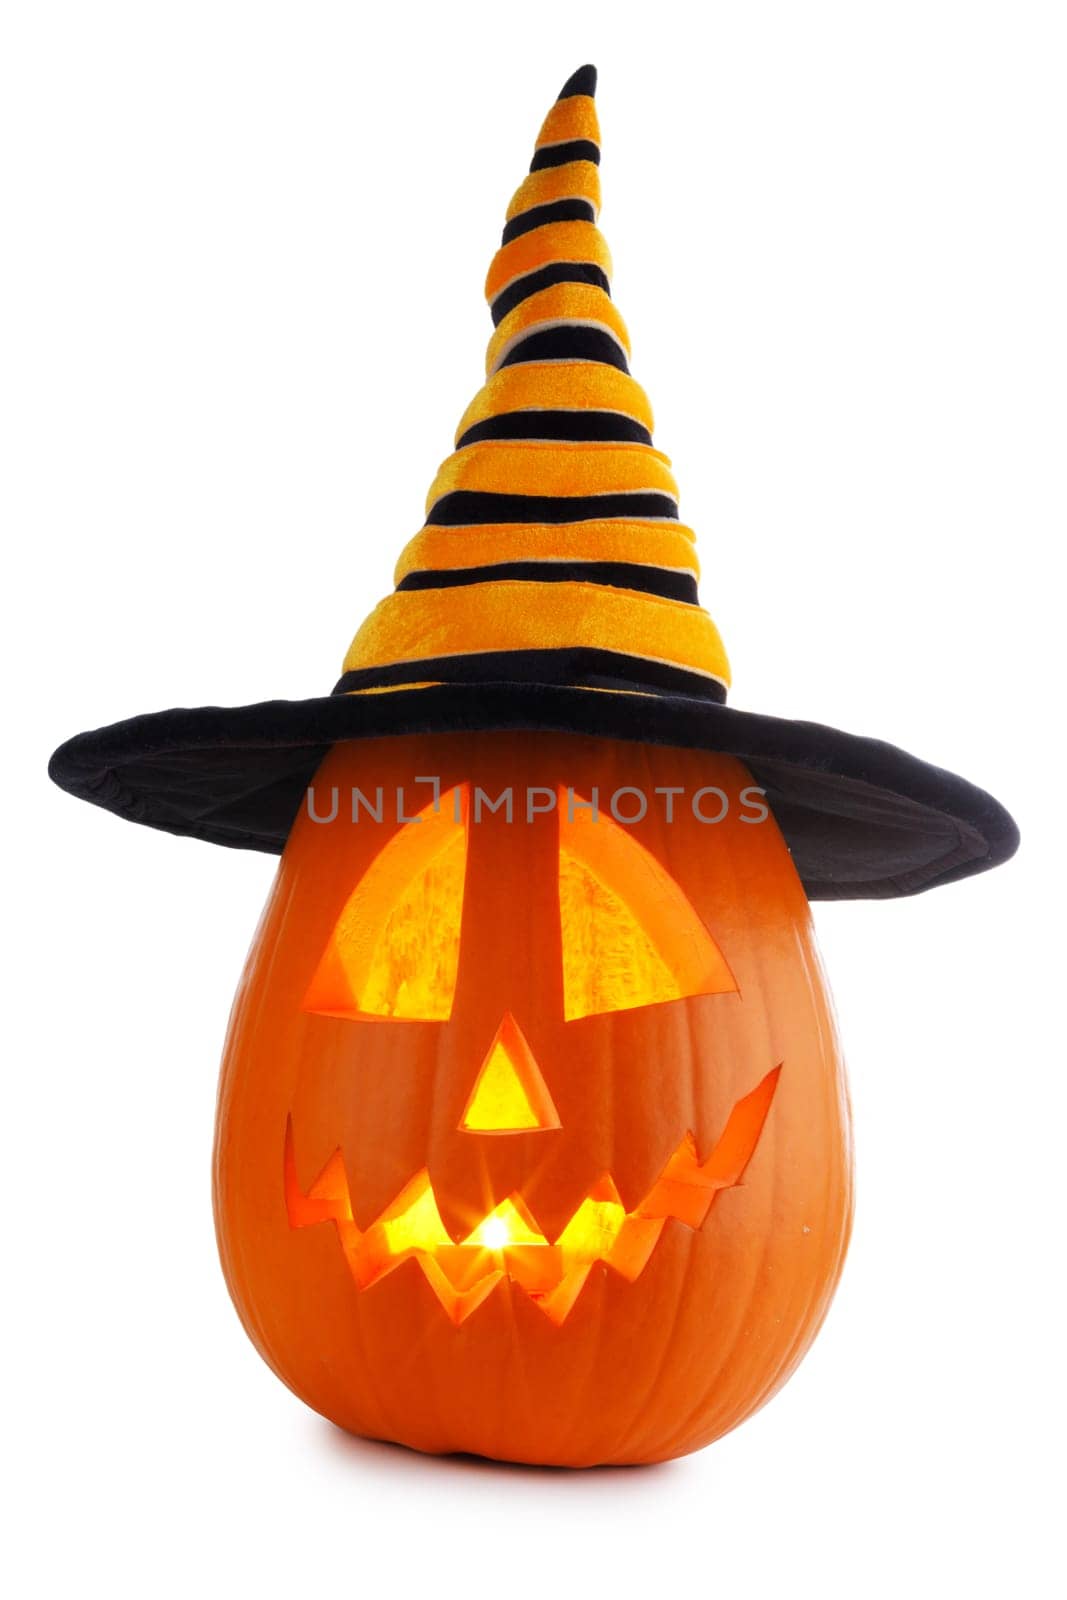 Jack O Lantern Halloween pumpkin by Yellowj